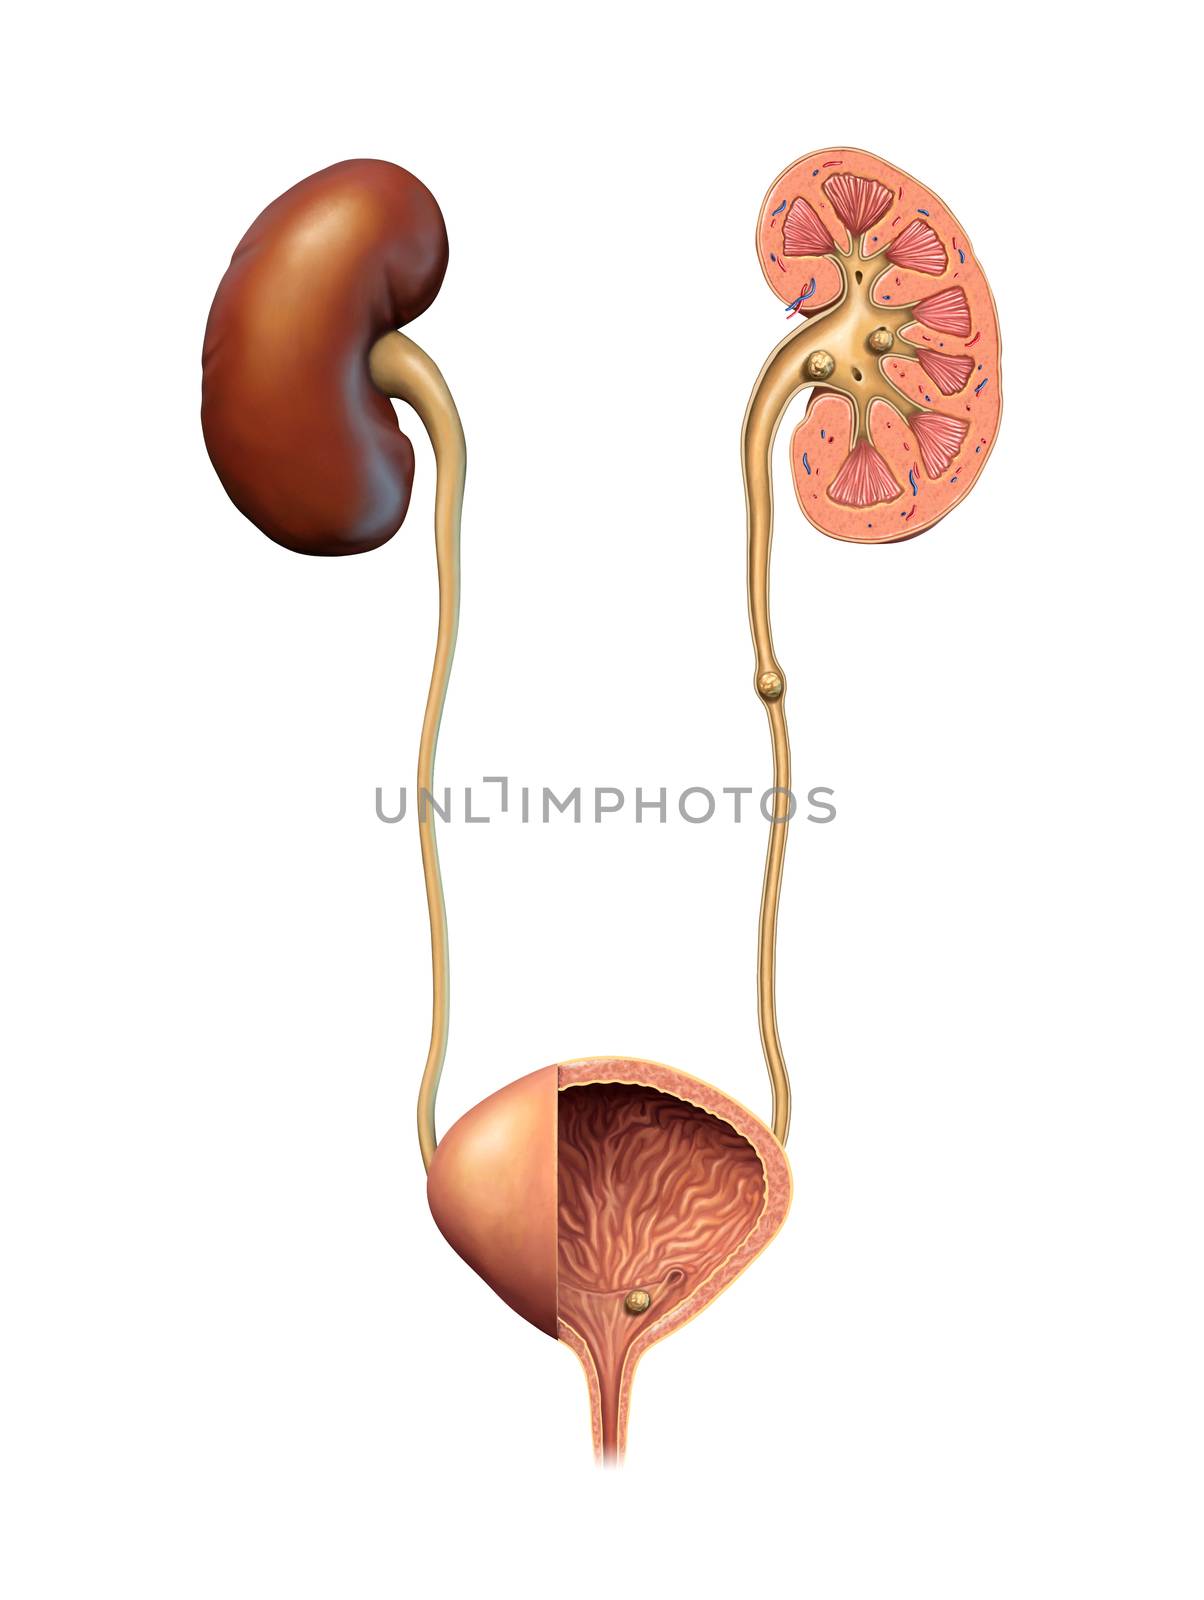 Kidney and urinary stones formation. Digital illustration.